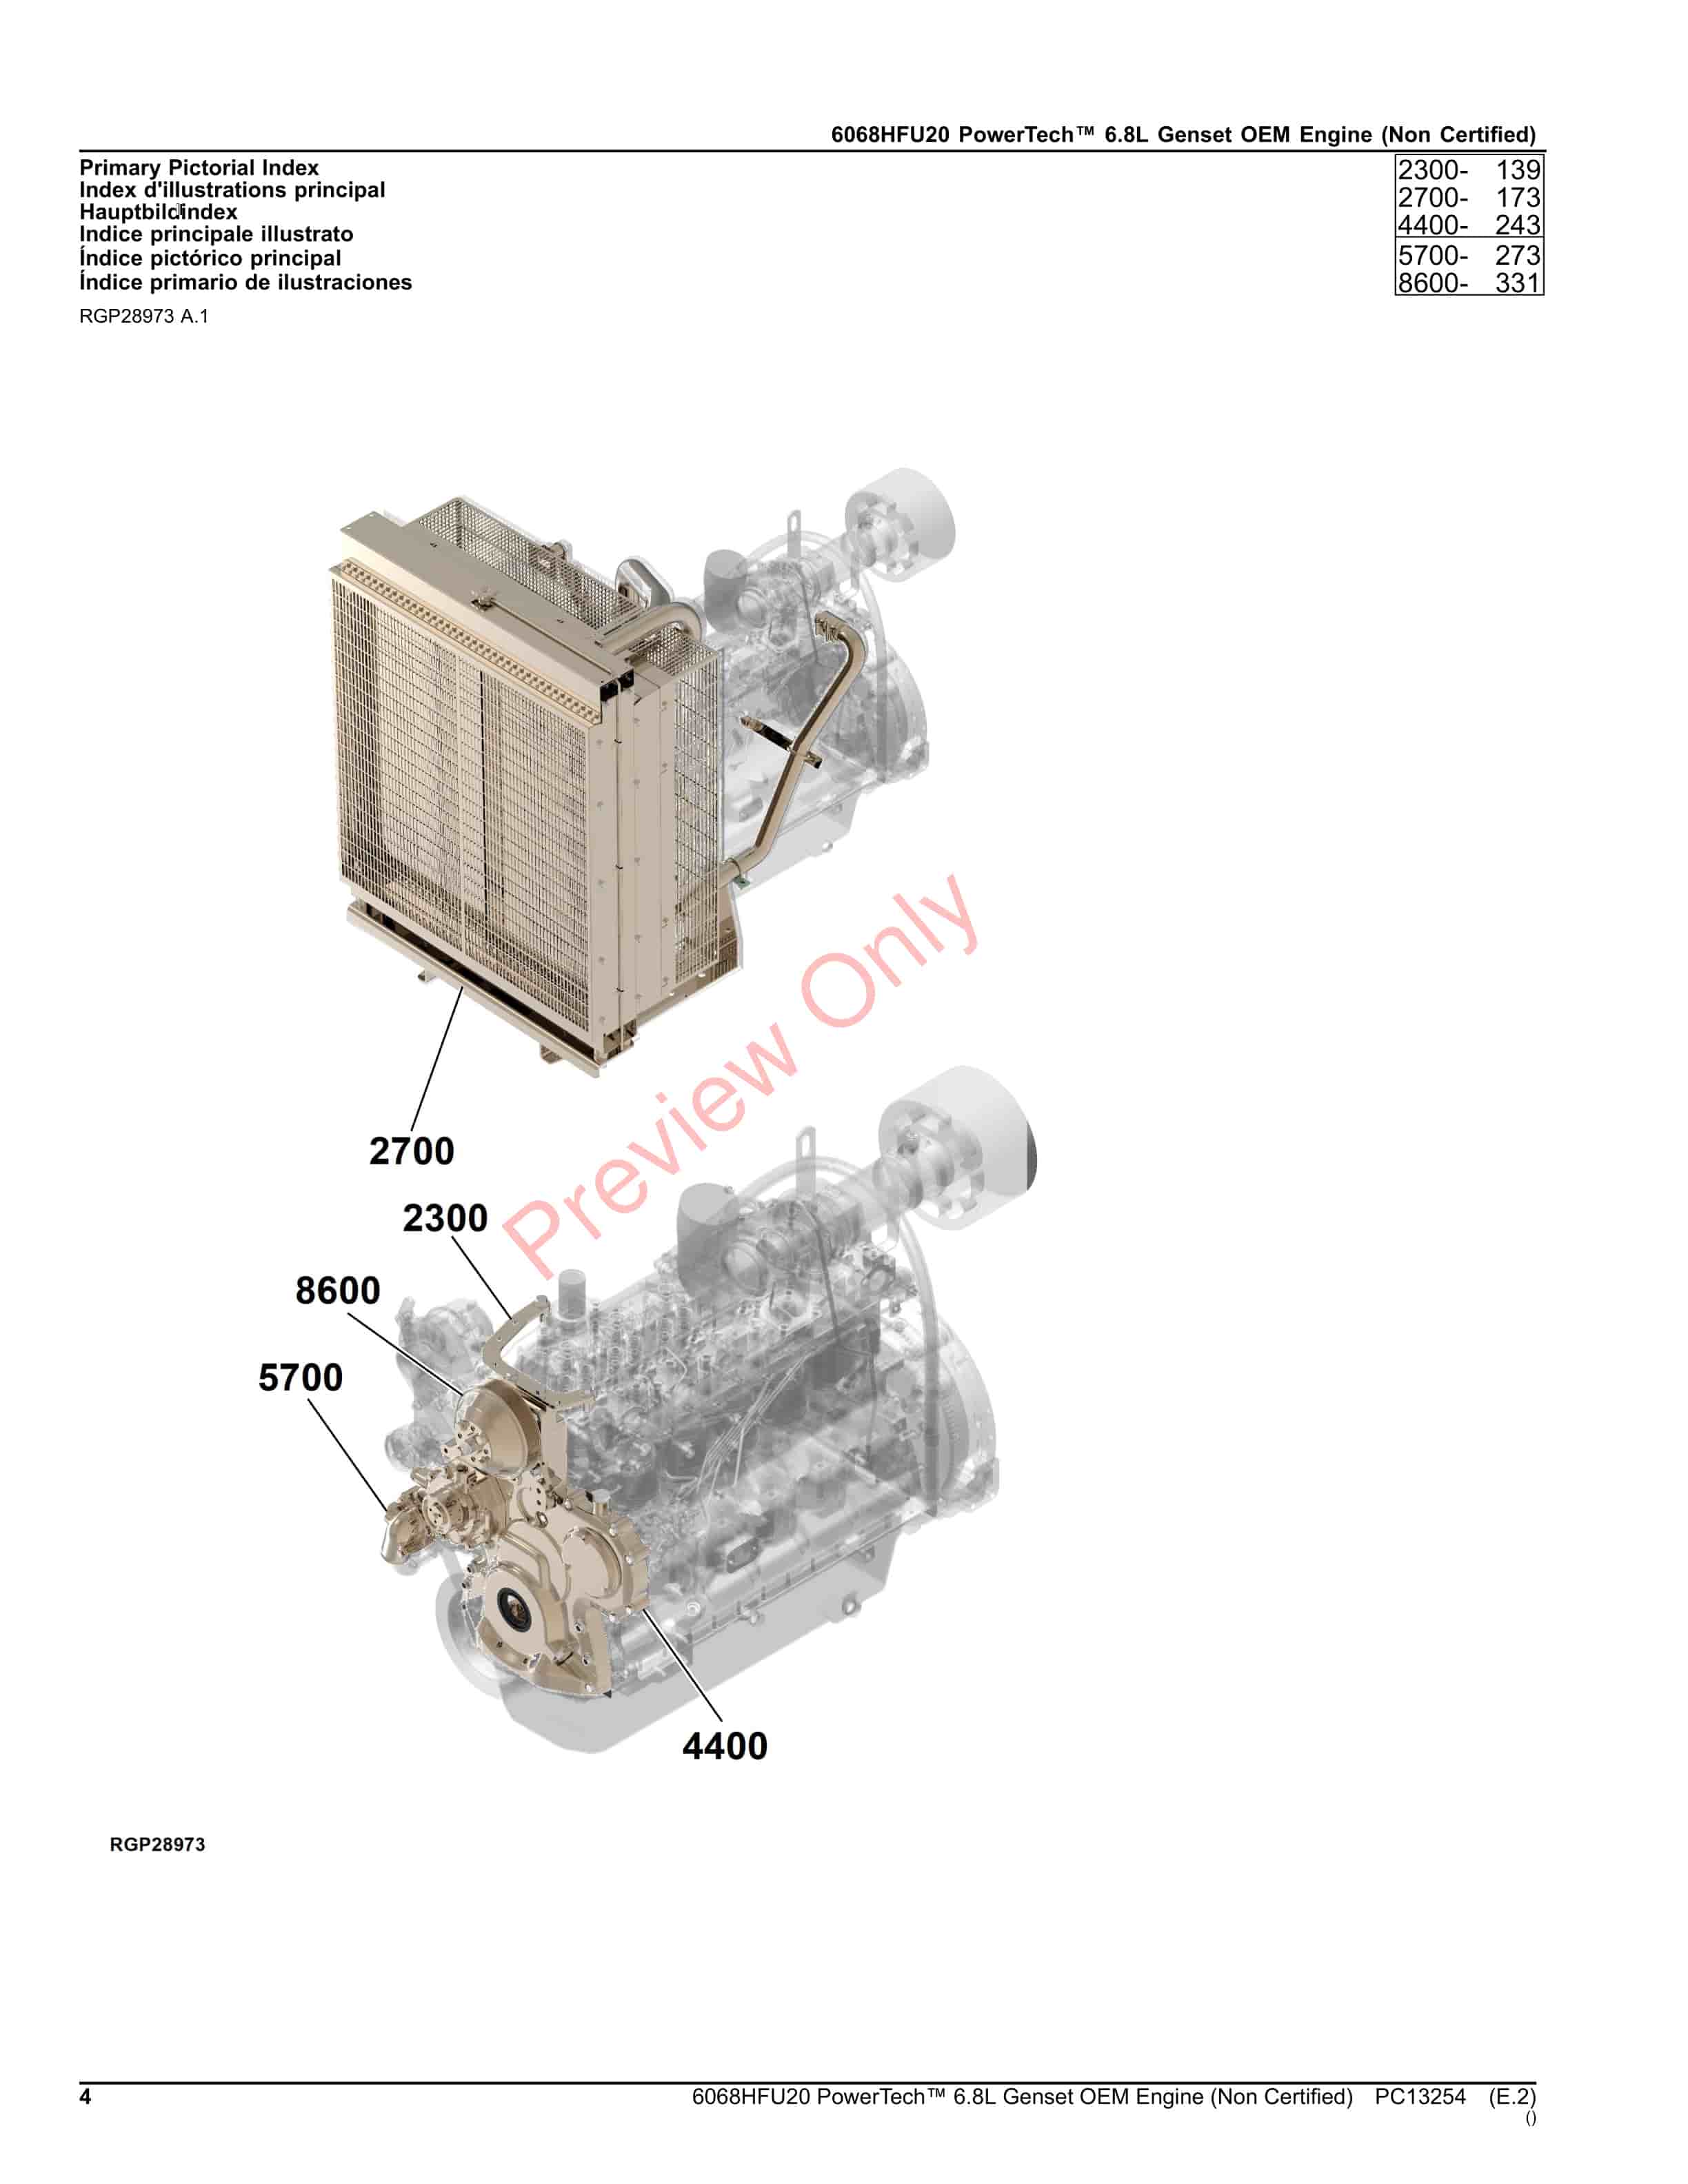 John Deere 6068HFU20 PowerTech 6.8L Genset OEM Engine (Non Certified) Parts Catalog PC13254 17SEP23-4